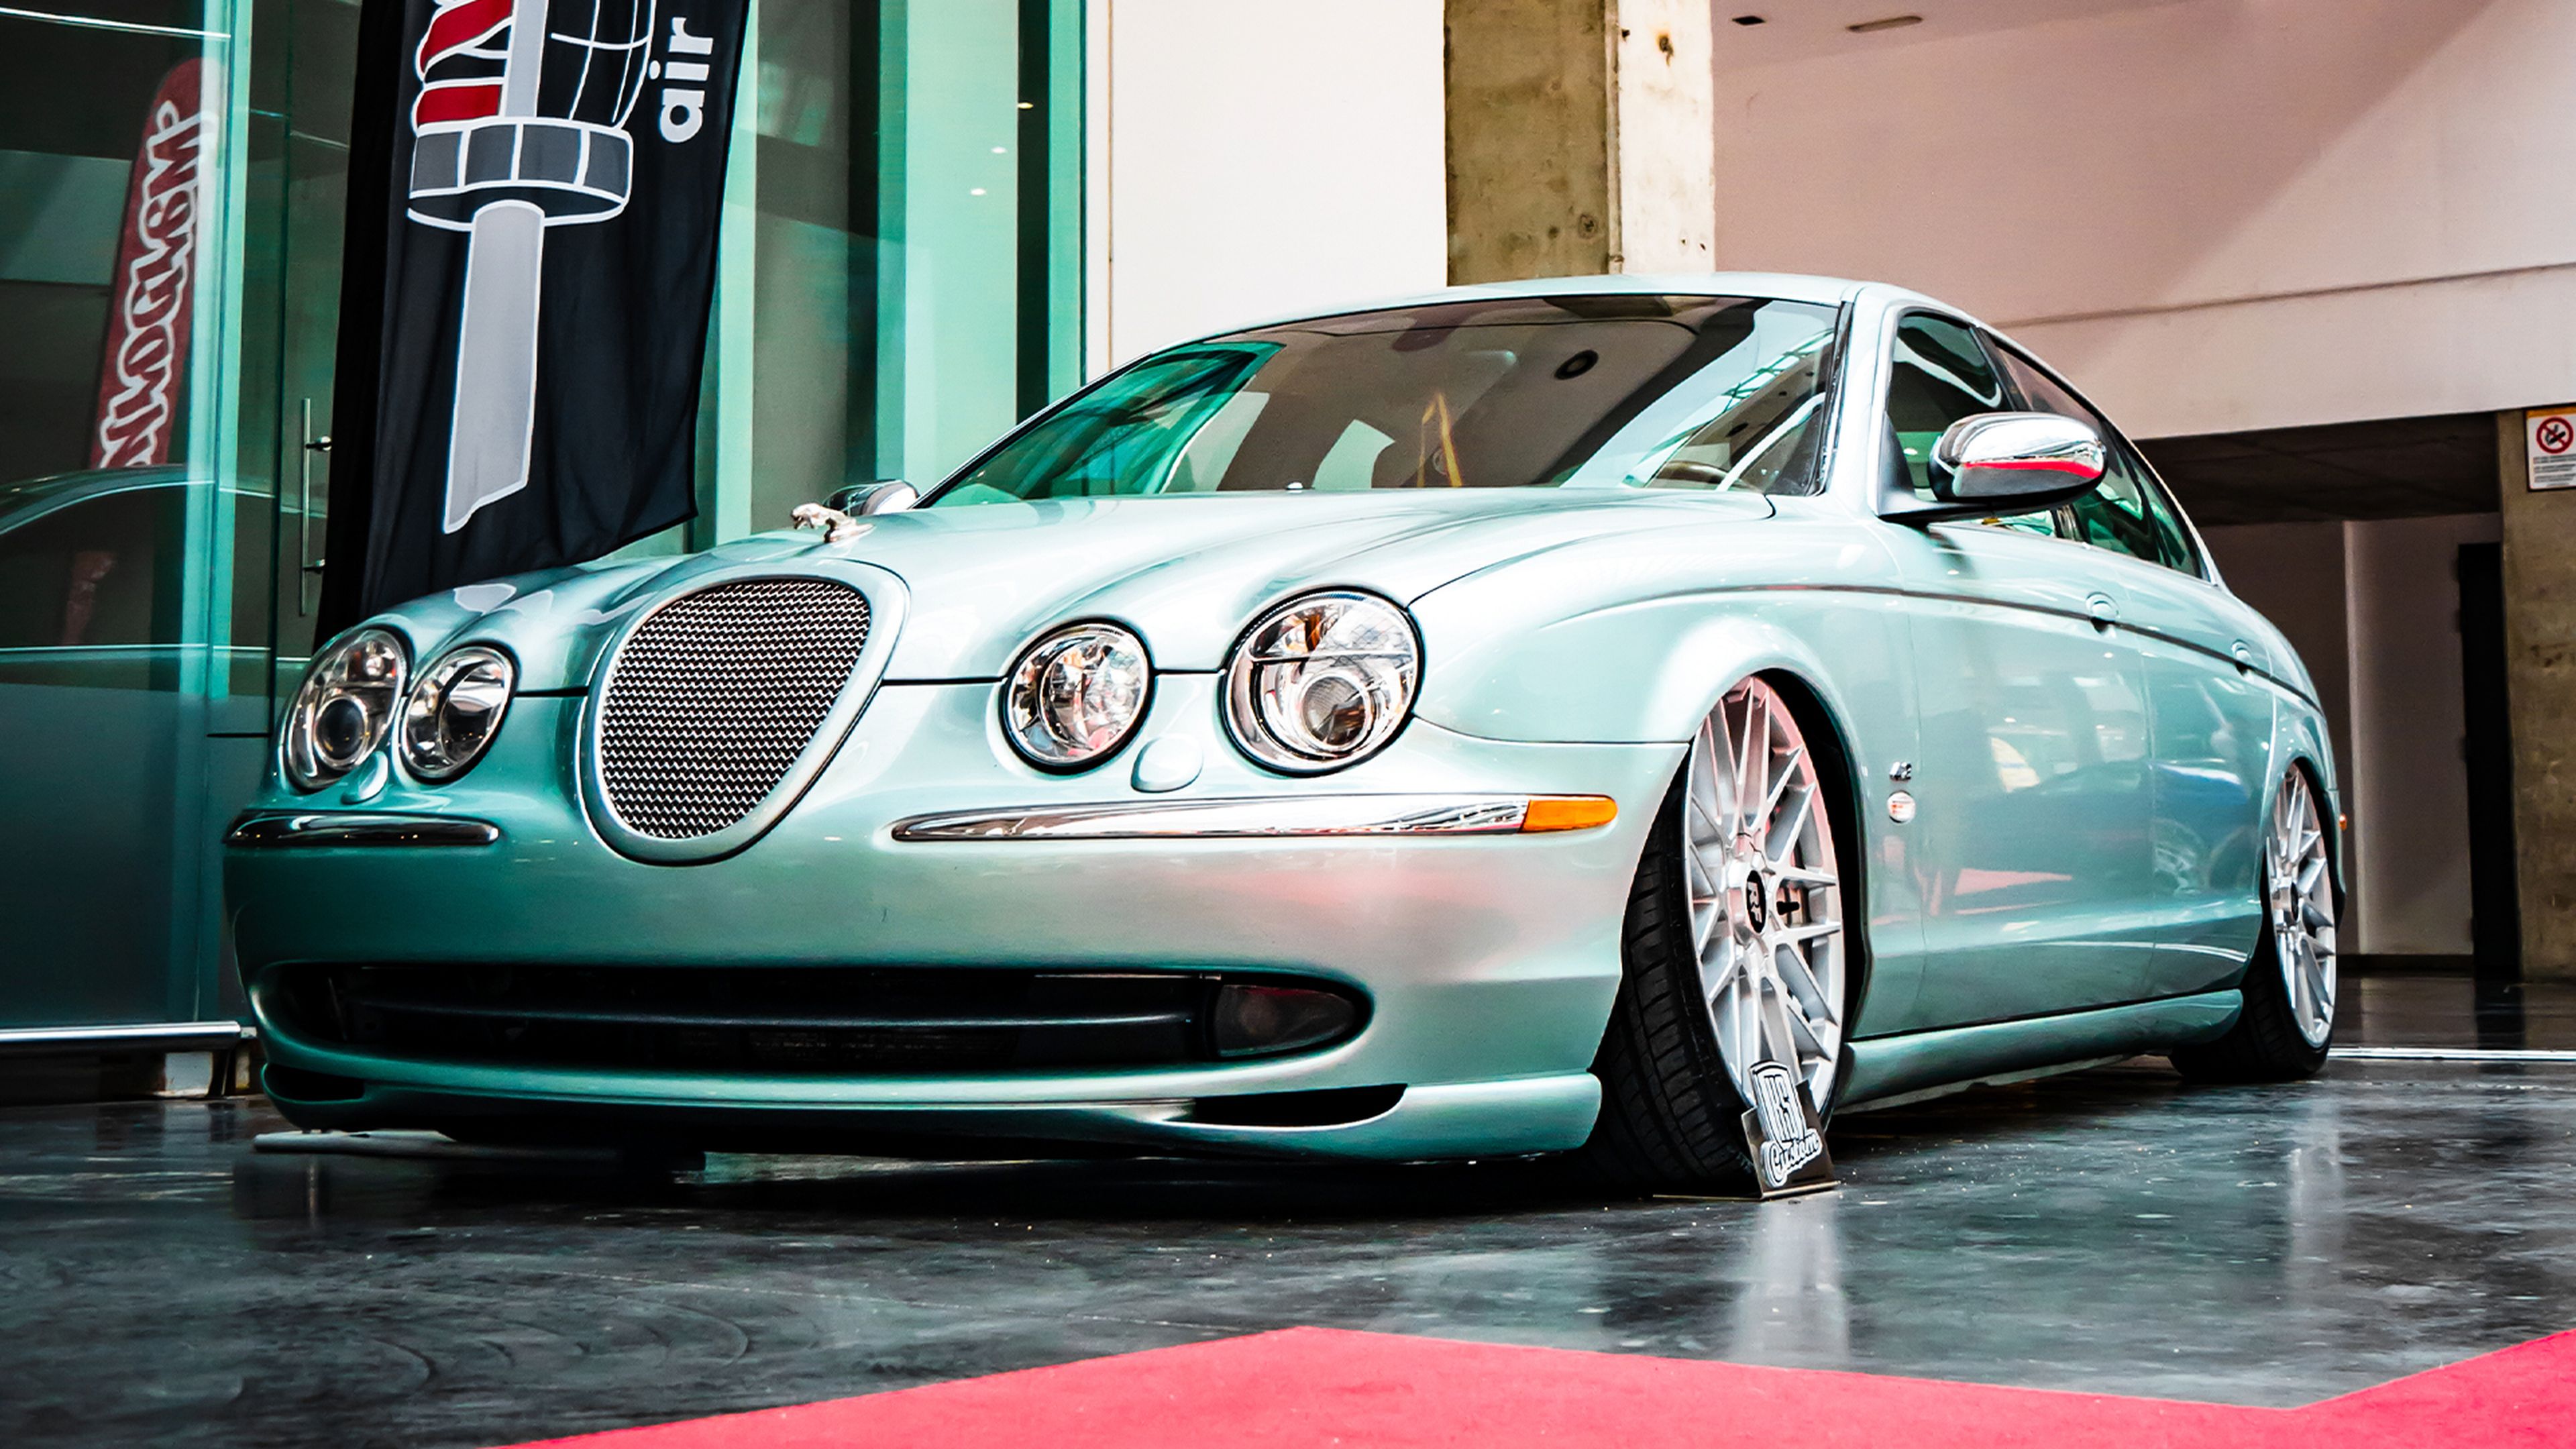 Jaguar estilo stanced.